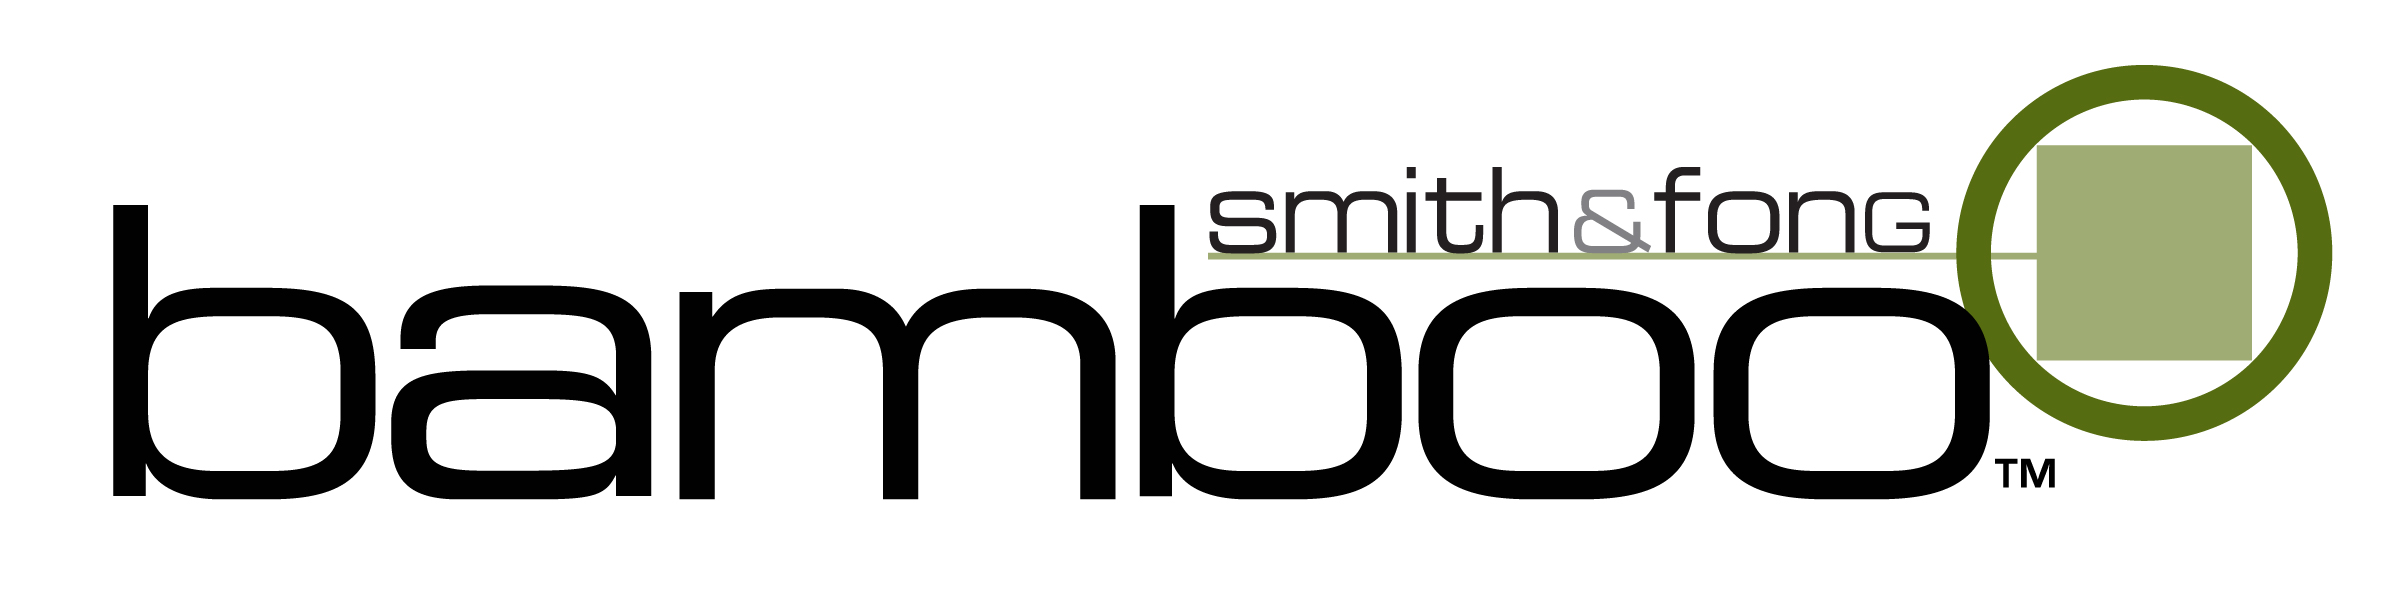 Smith&Fong Bamboo